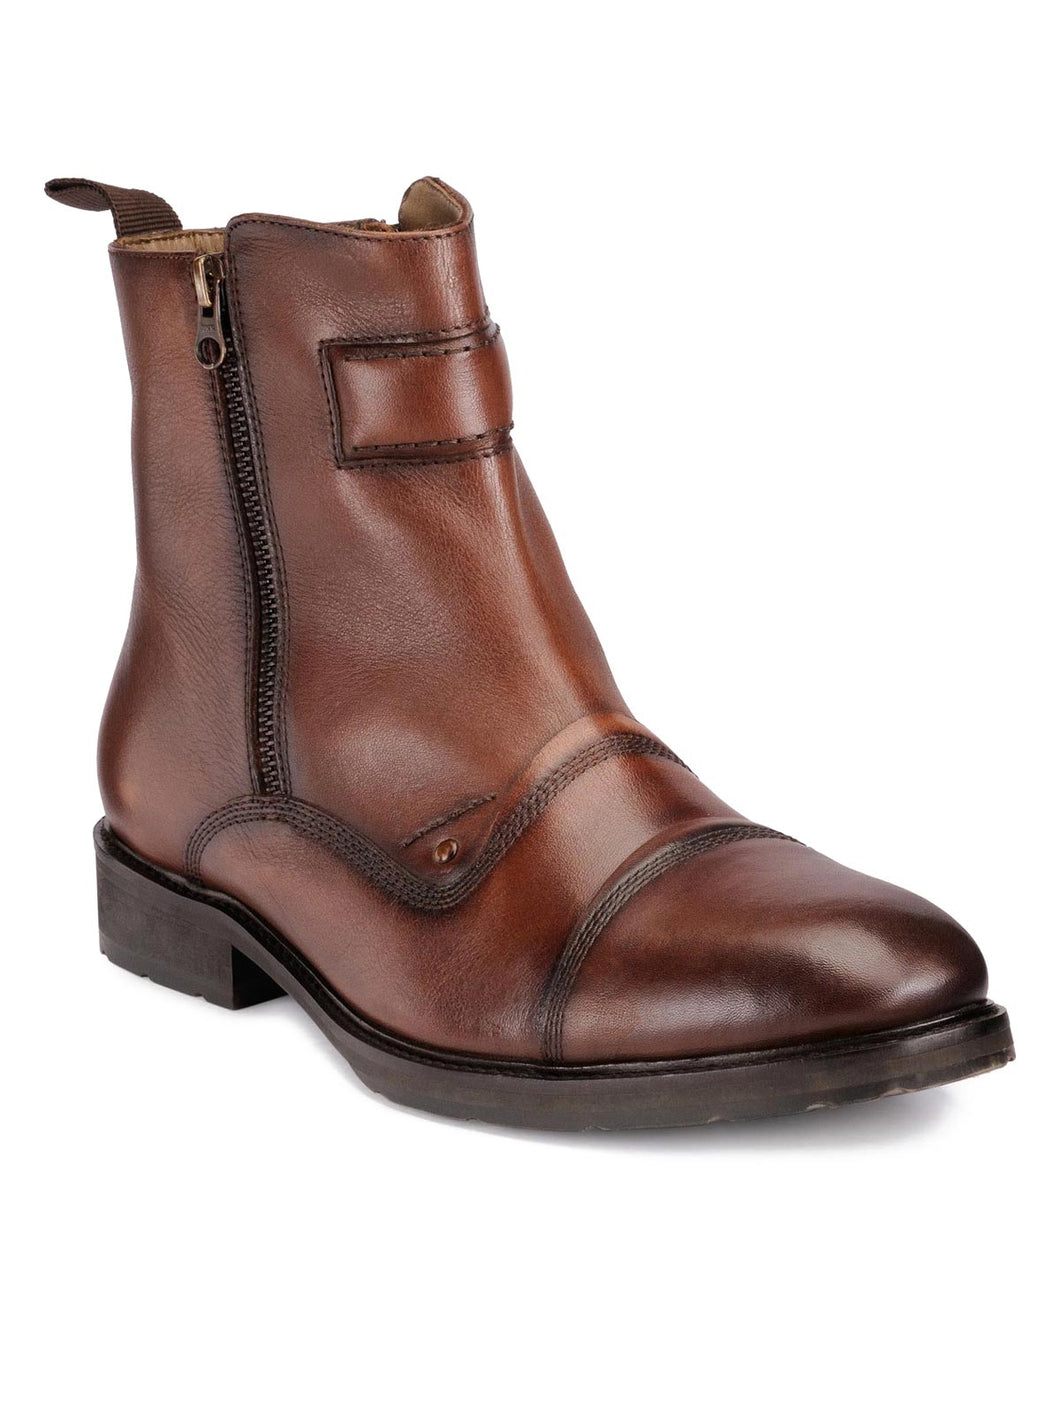 Teakwood Genuine Leather Boot Shoes